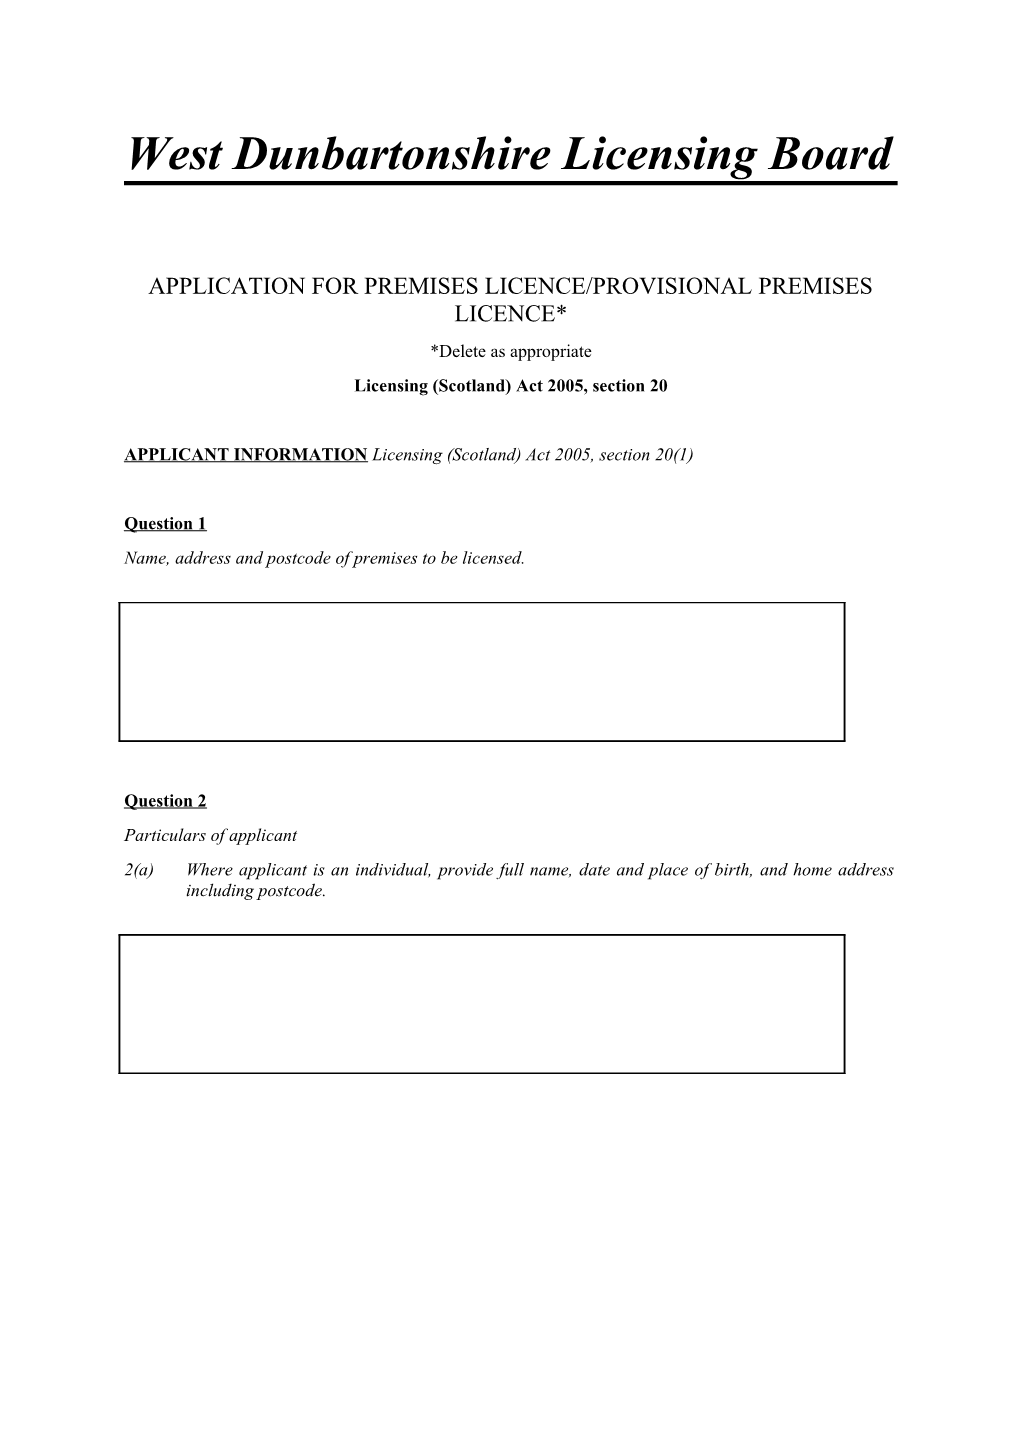 Application for Premises Licence/Provisional Premises Licence*